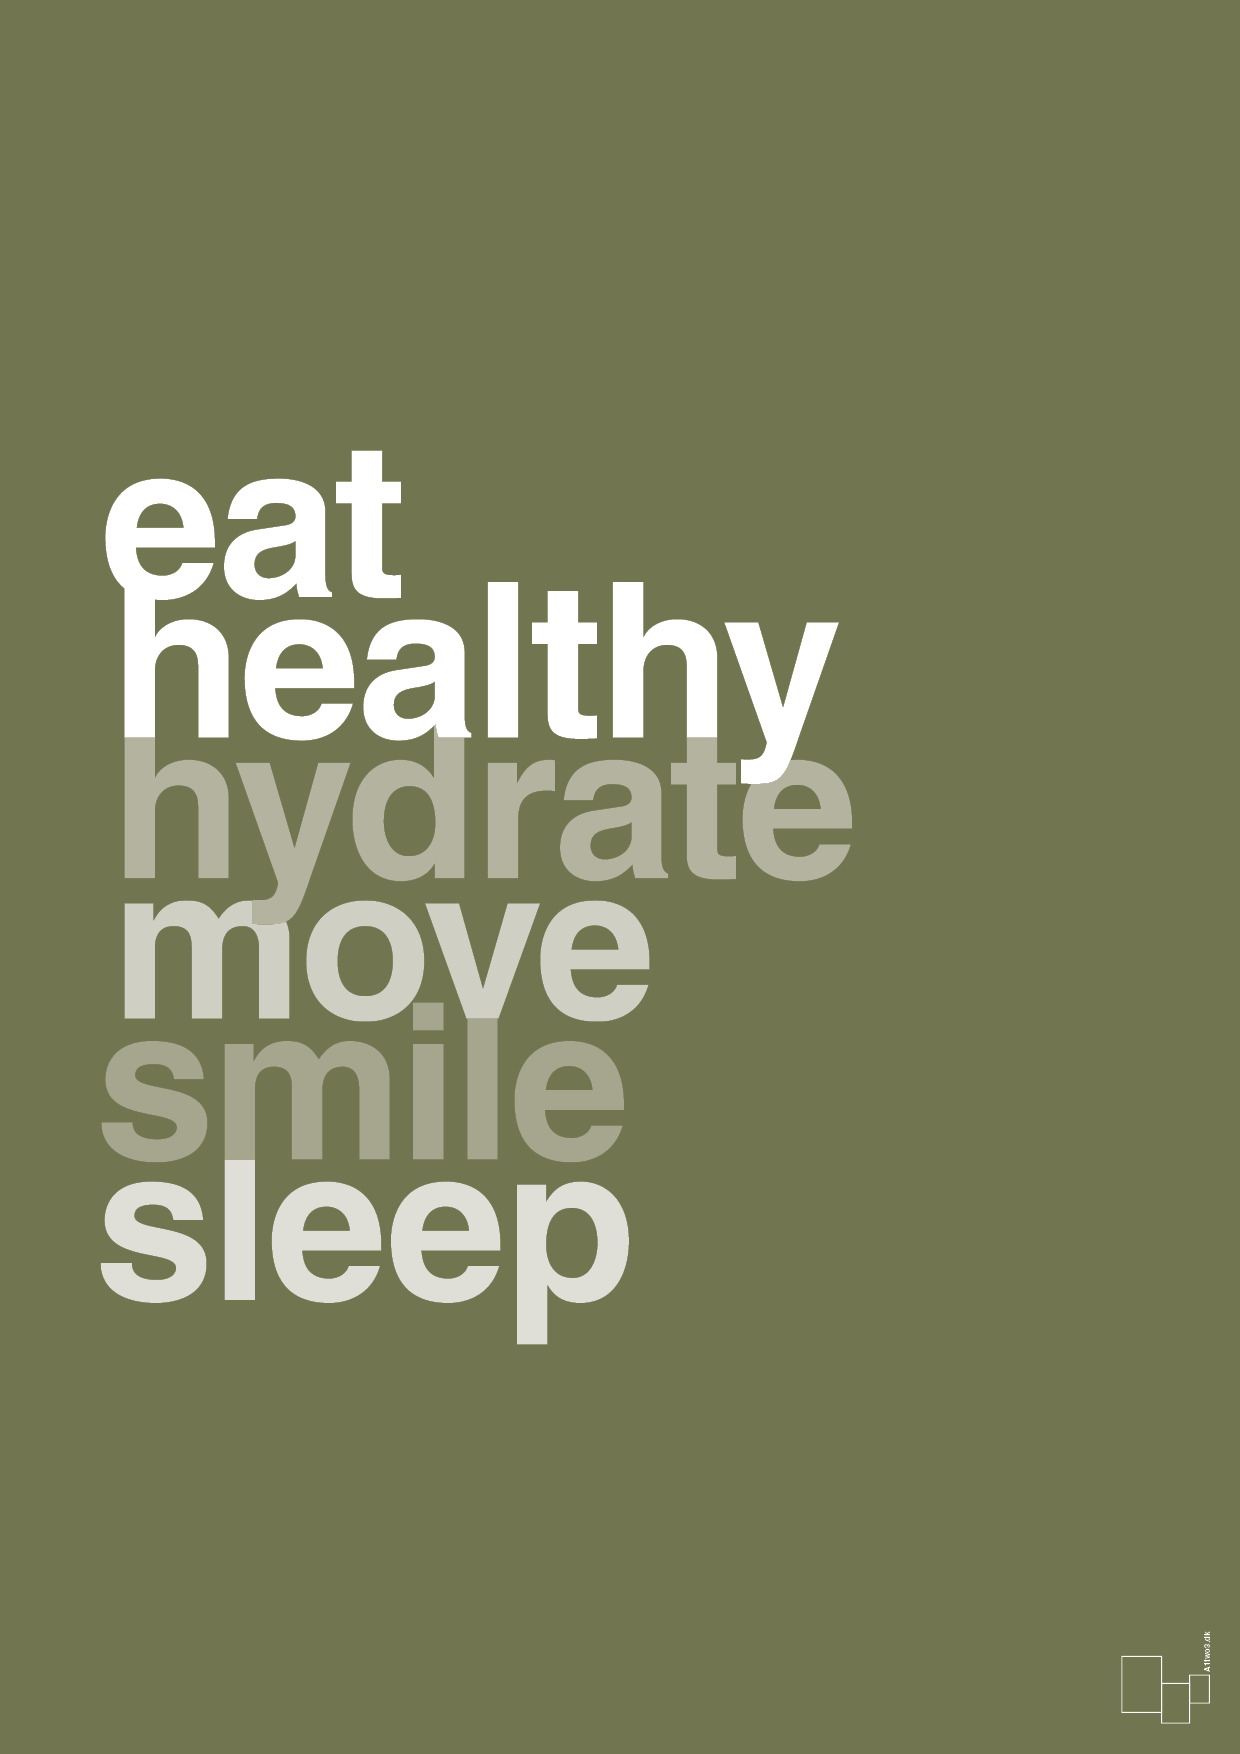 eat healthy hydrate move smile sleep - Plakat med Ordsprog i Secret Meadow